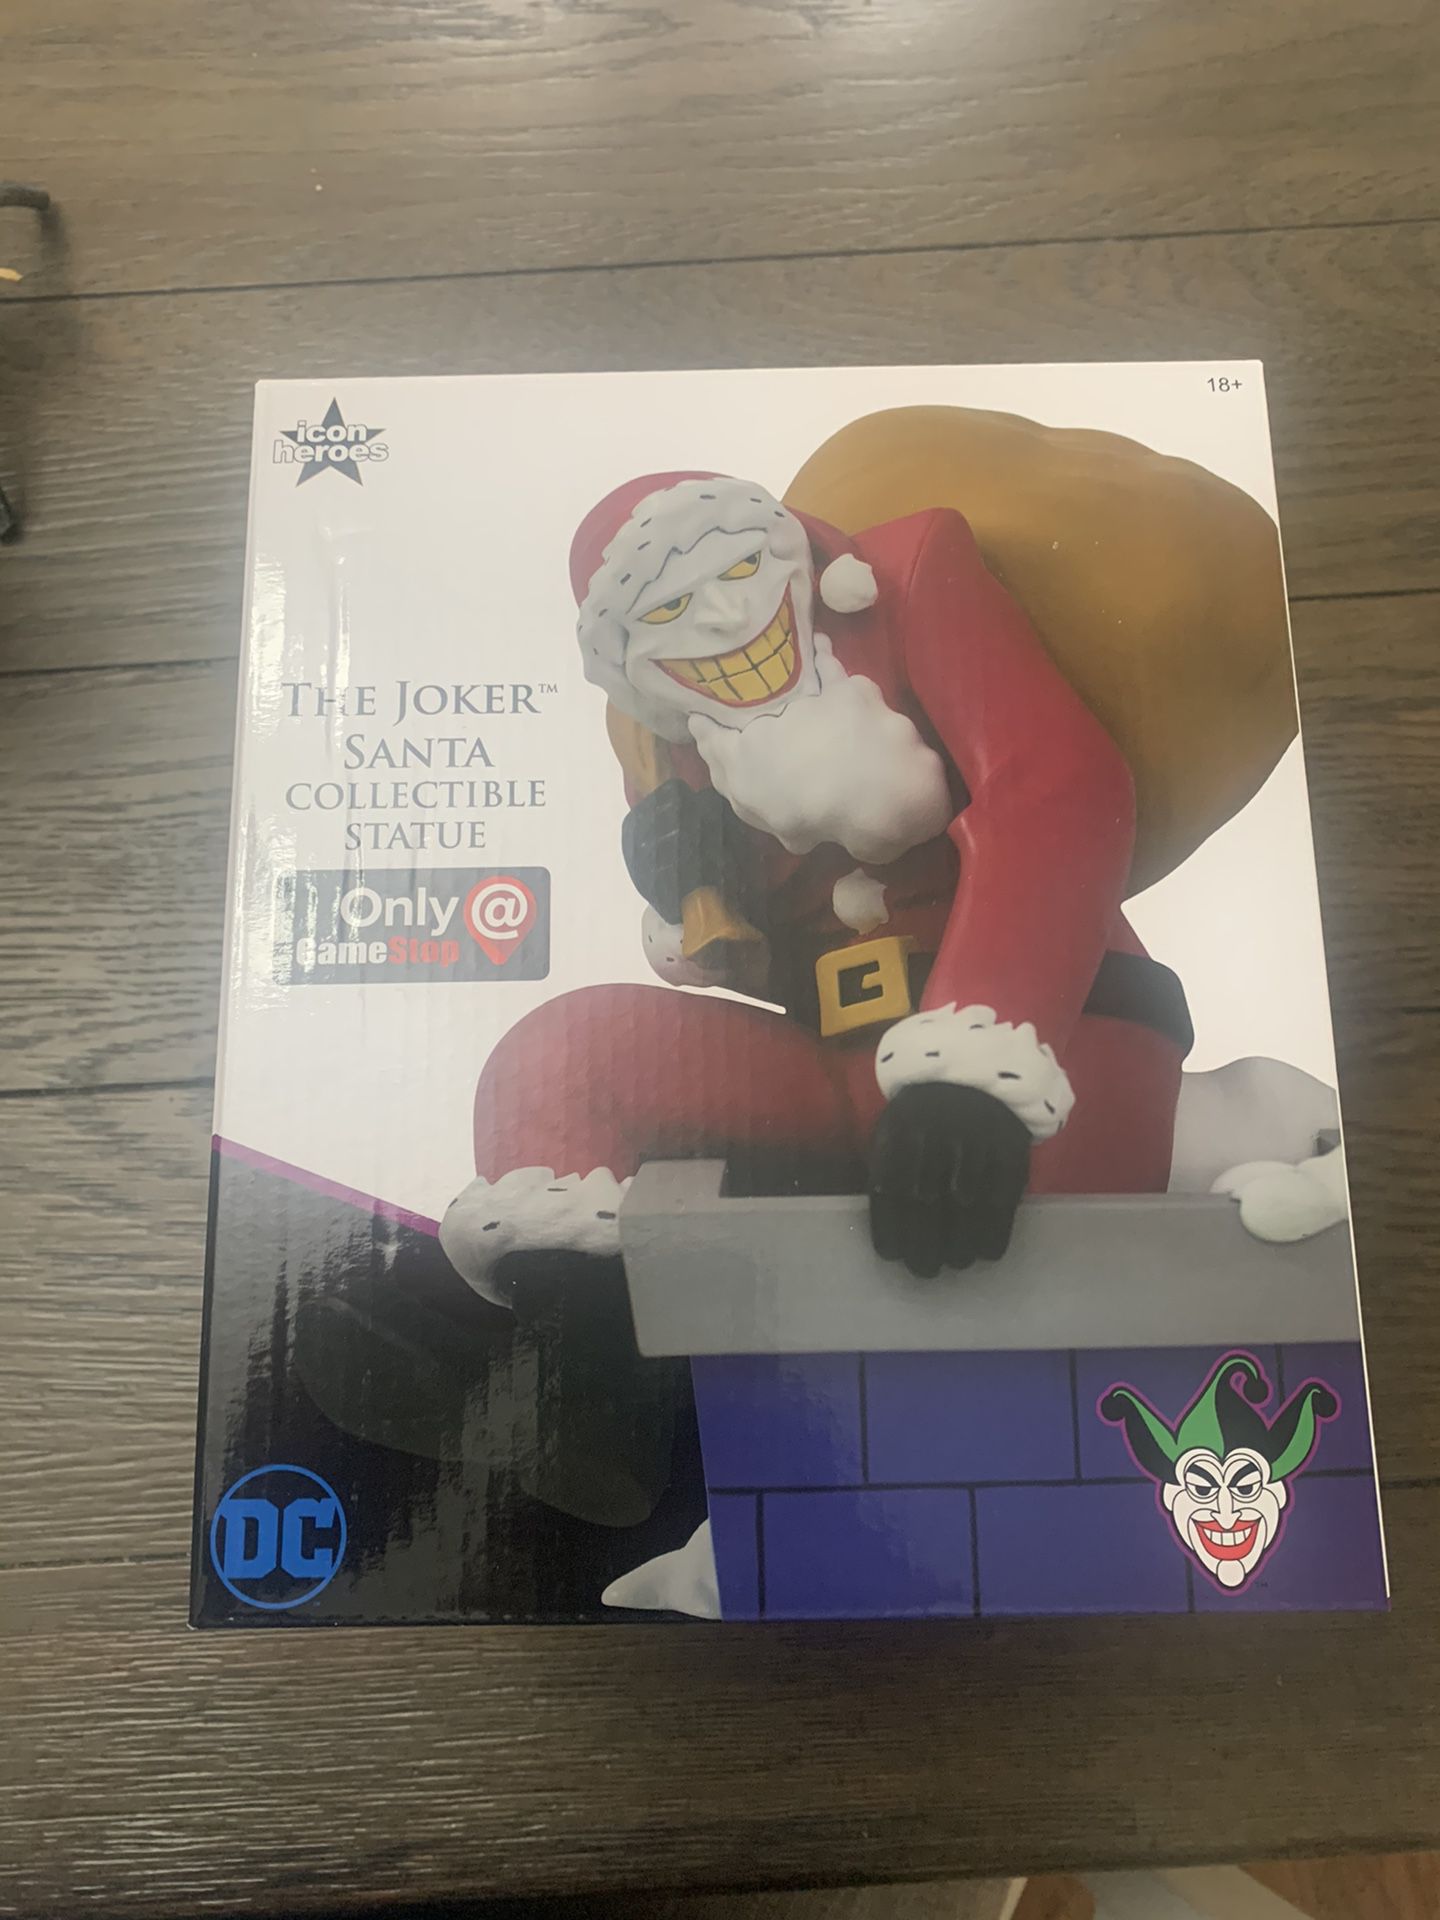 The Joker Santa Collectible Statue